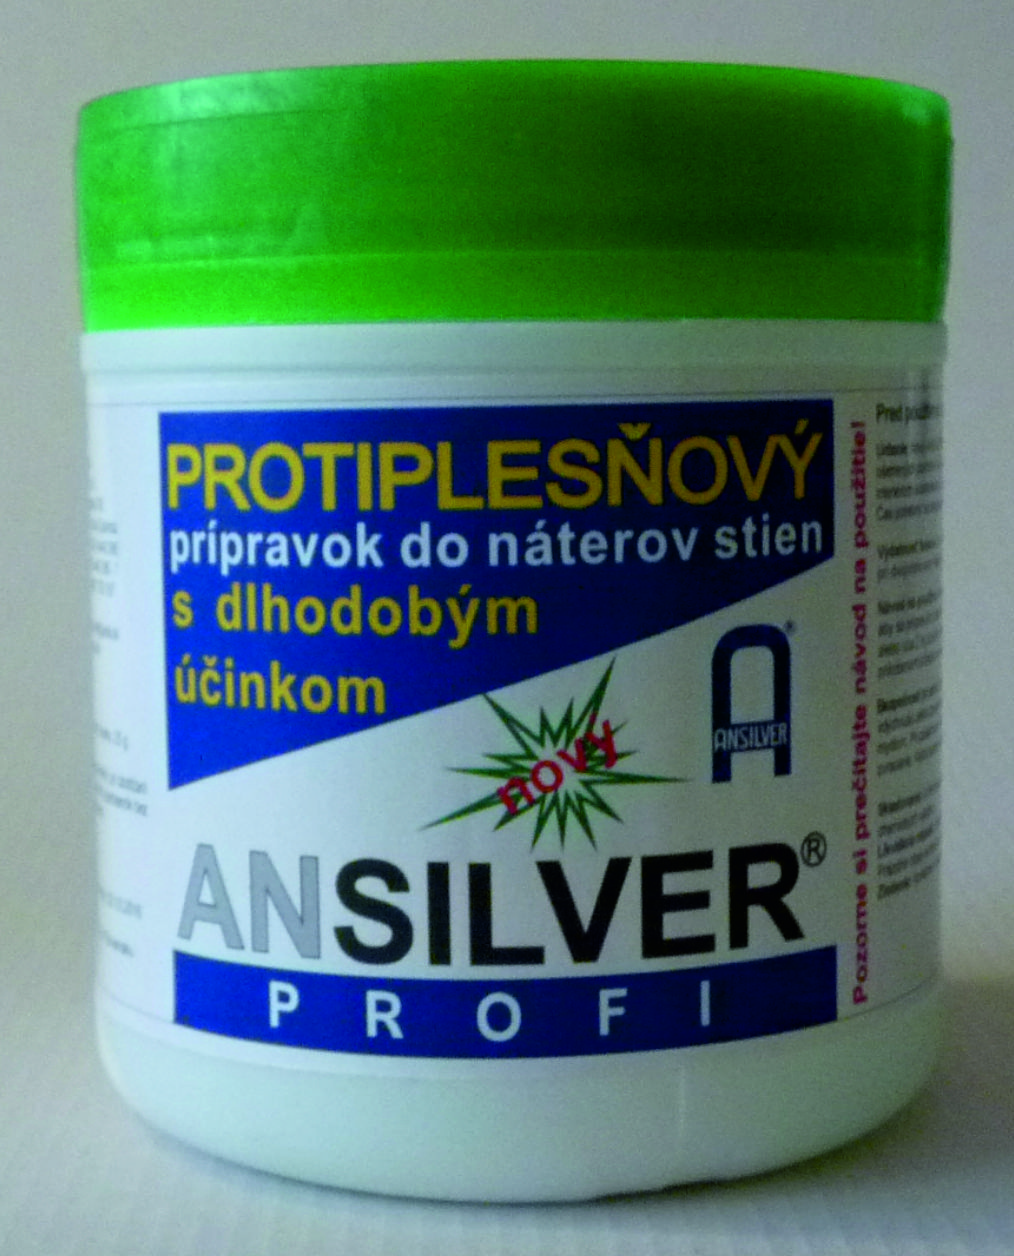 Ansilver Profi 25g protiplesňový a antibakteriálny prášok do stierok